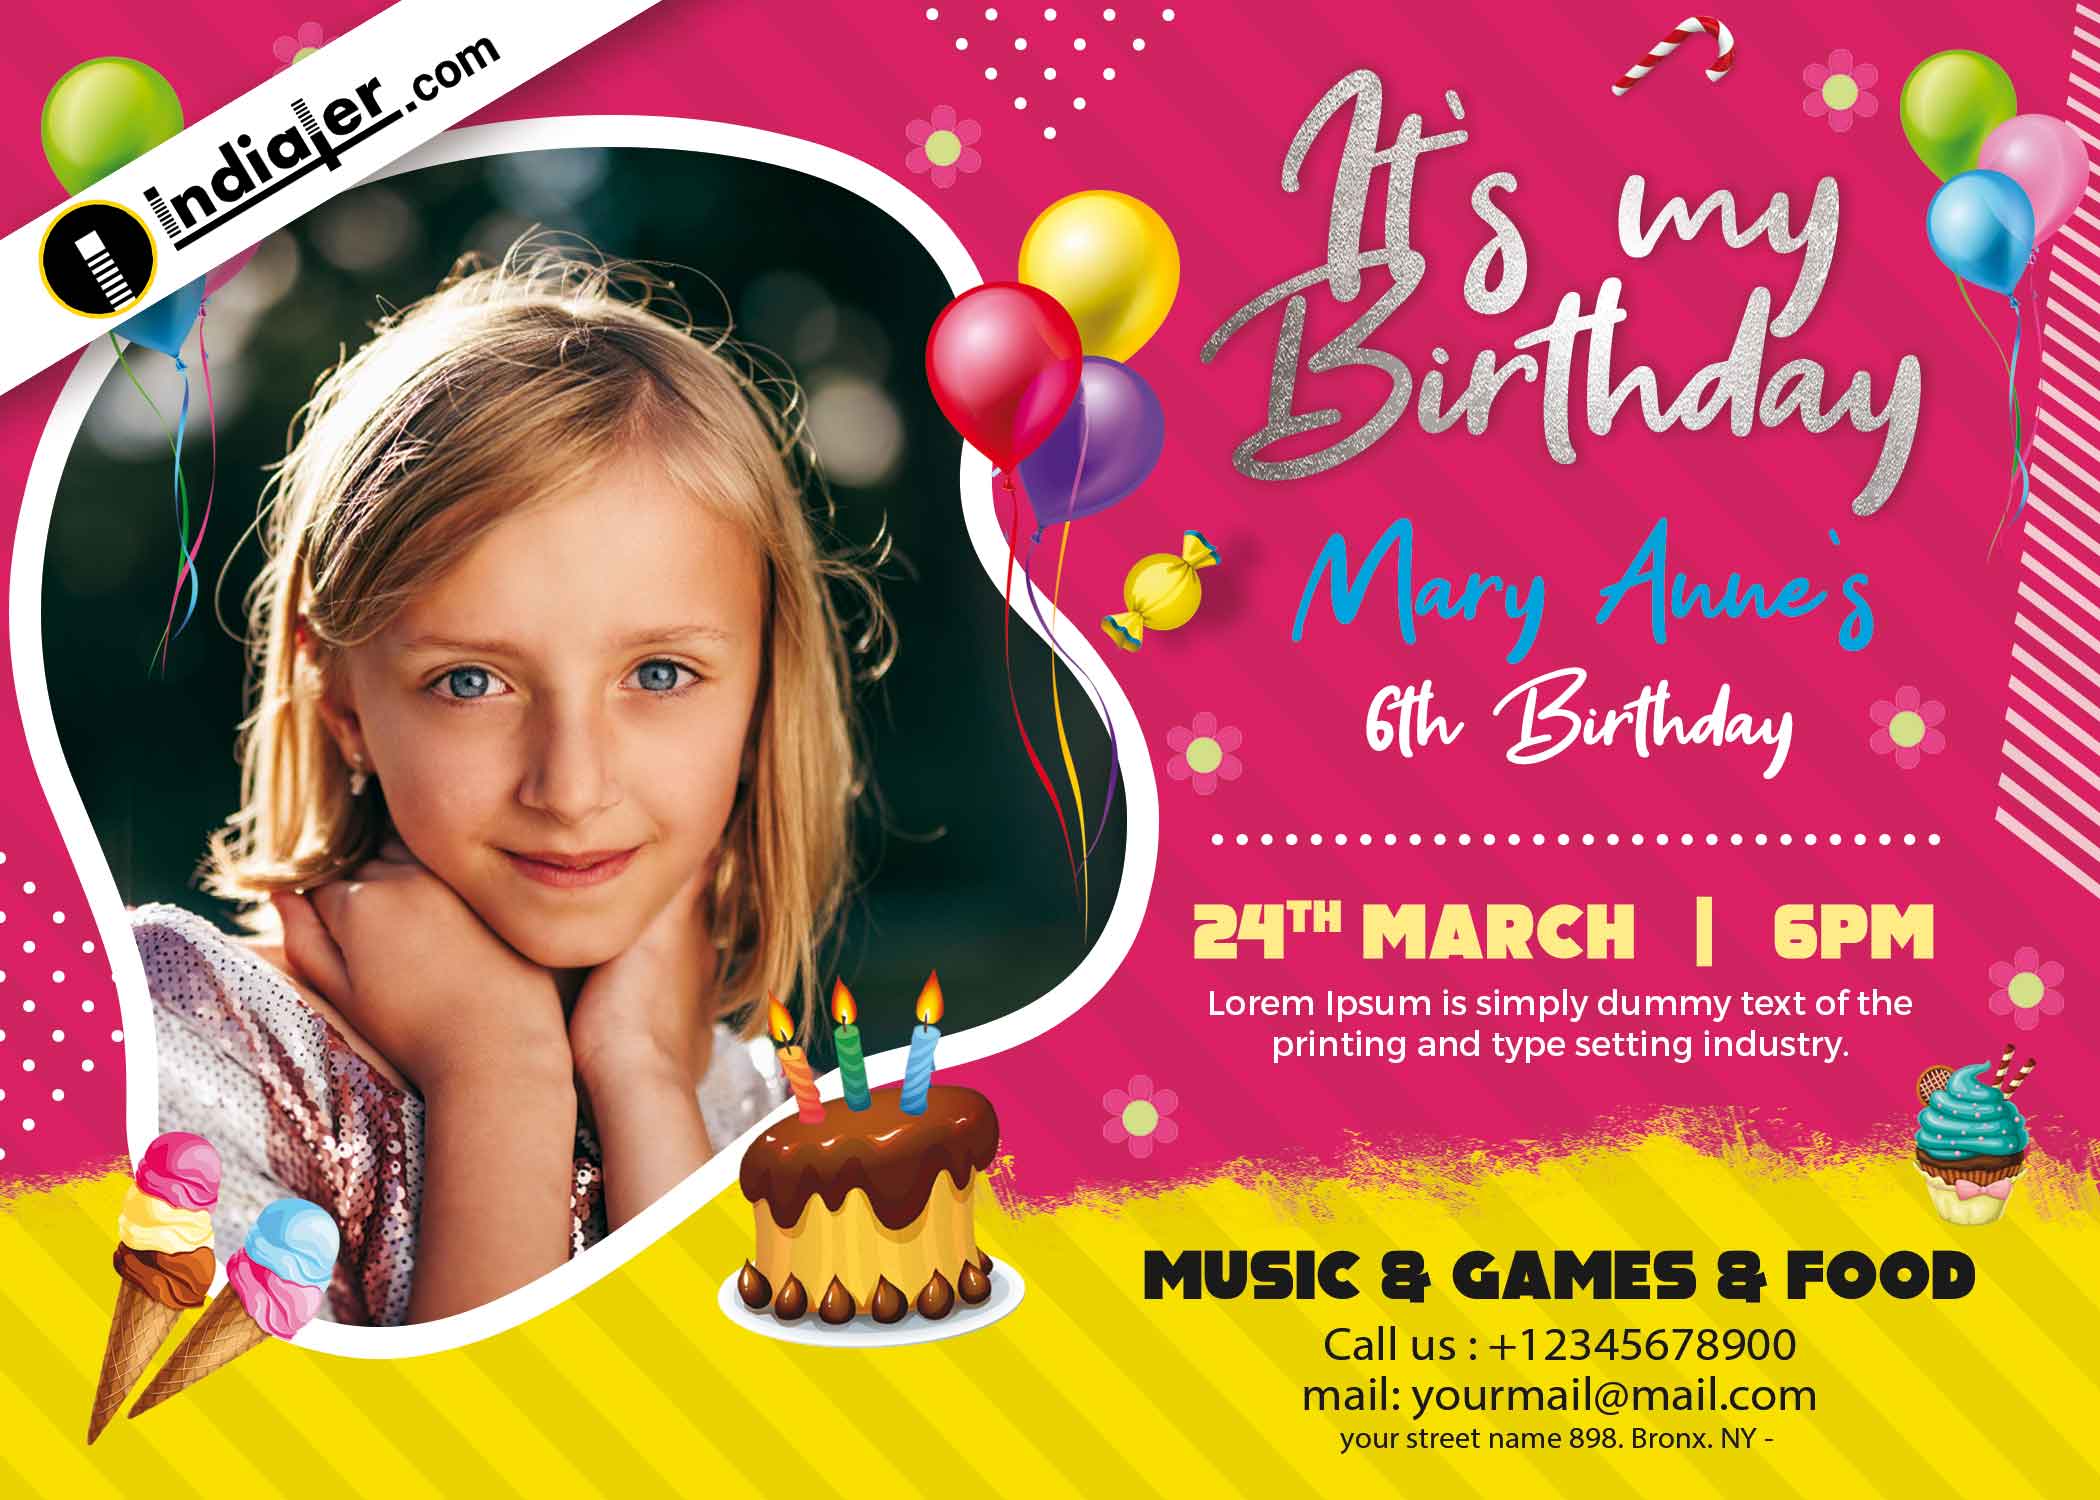 create-birthday-invitation-card-online-free-sale-now-save-53-jlcatj